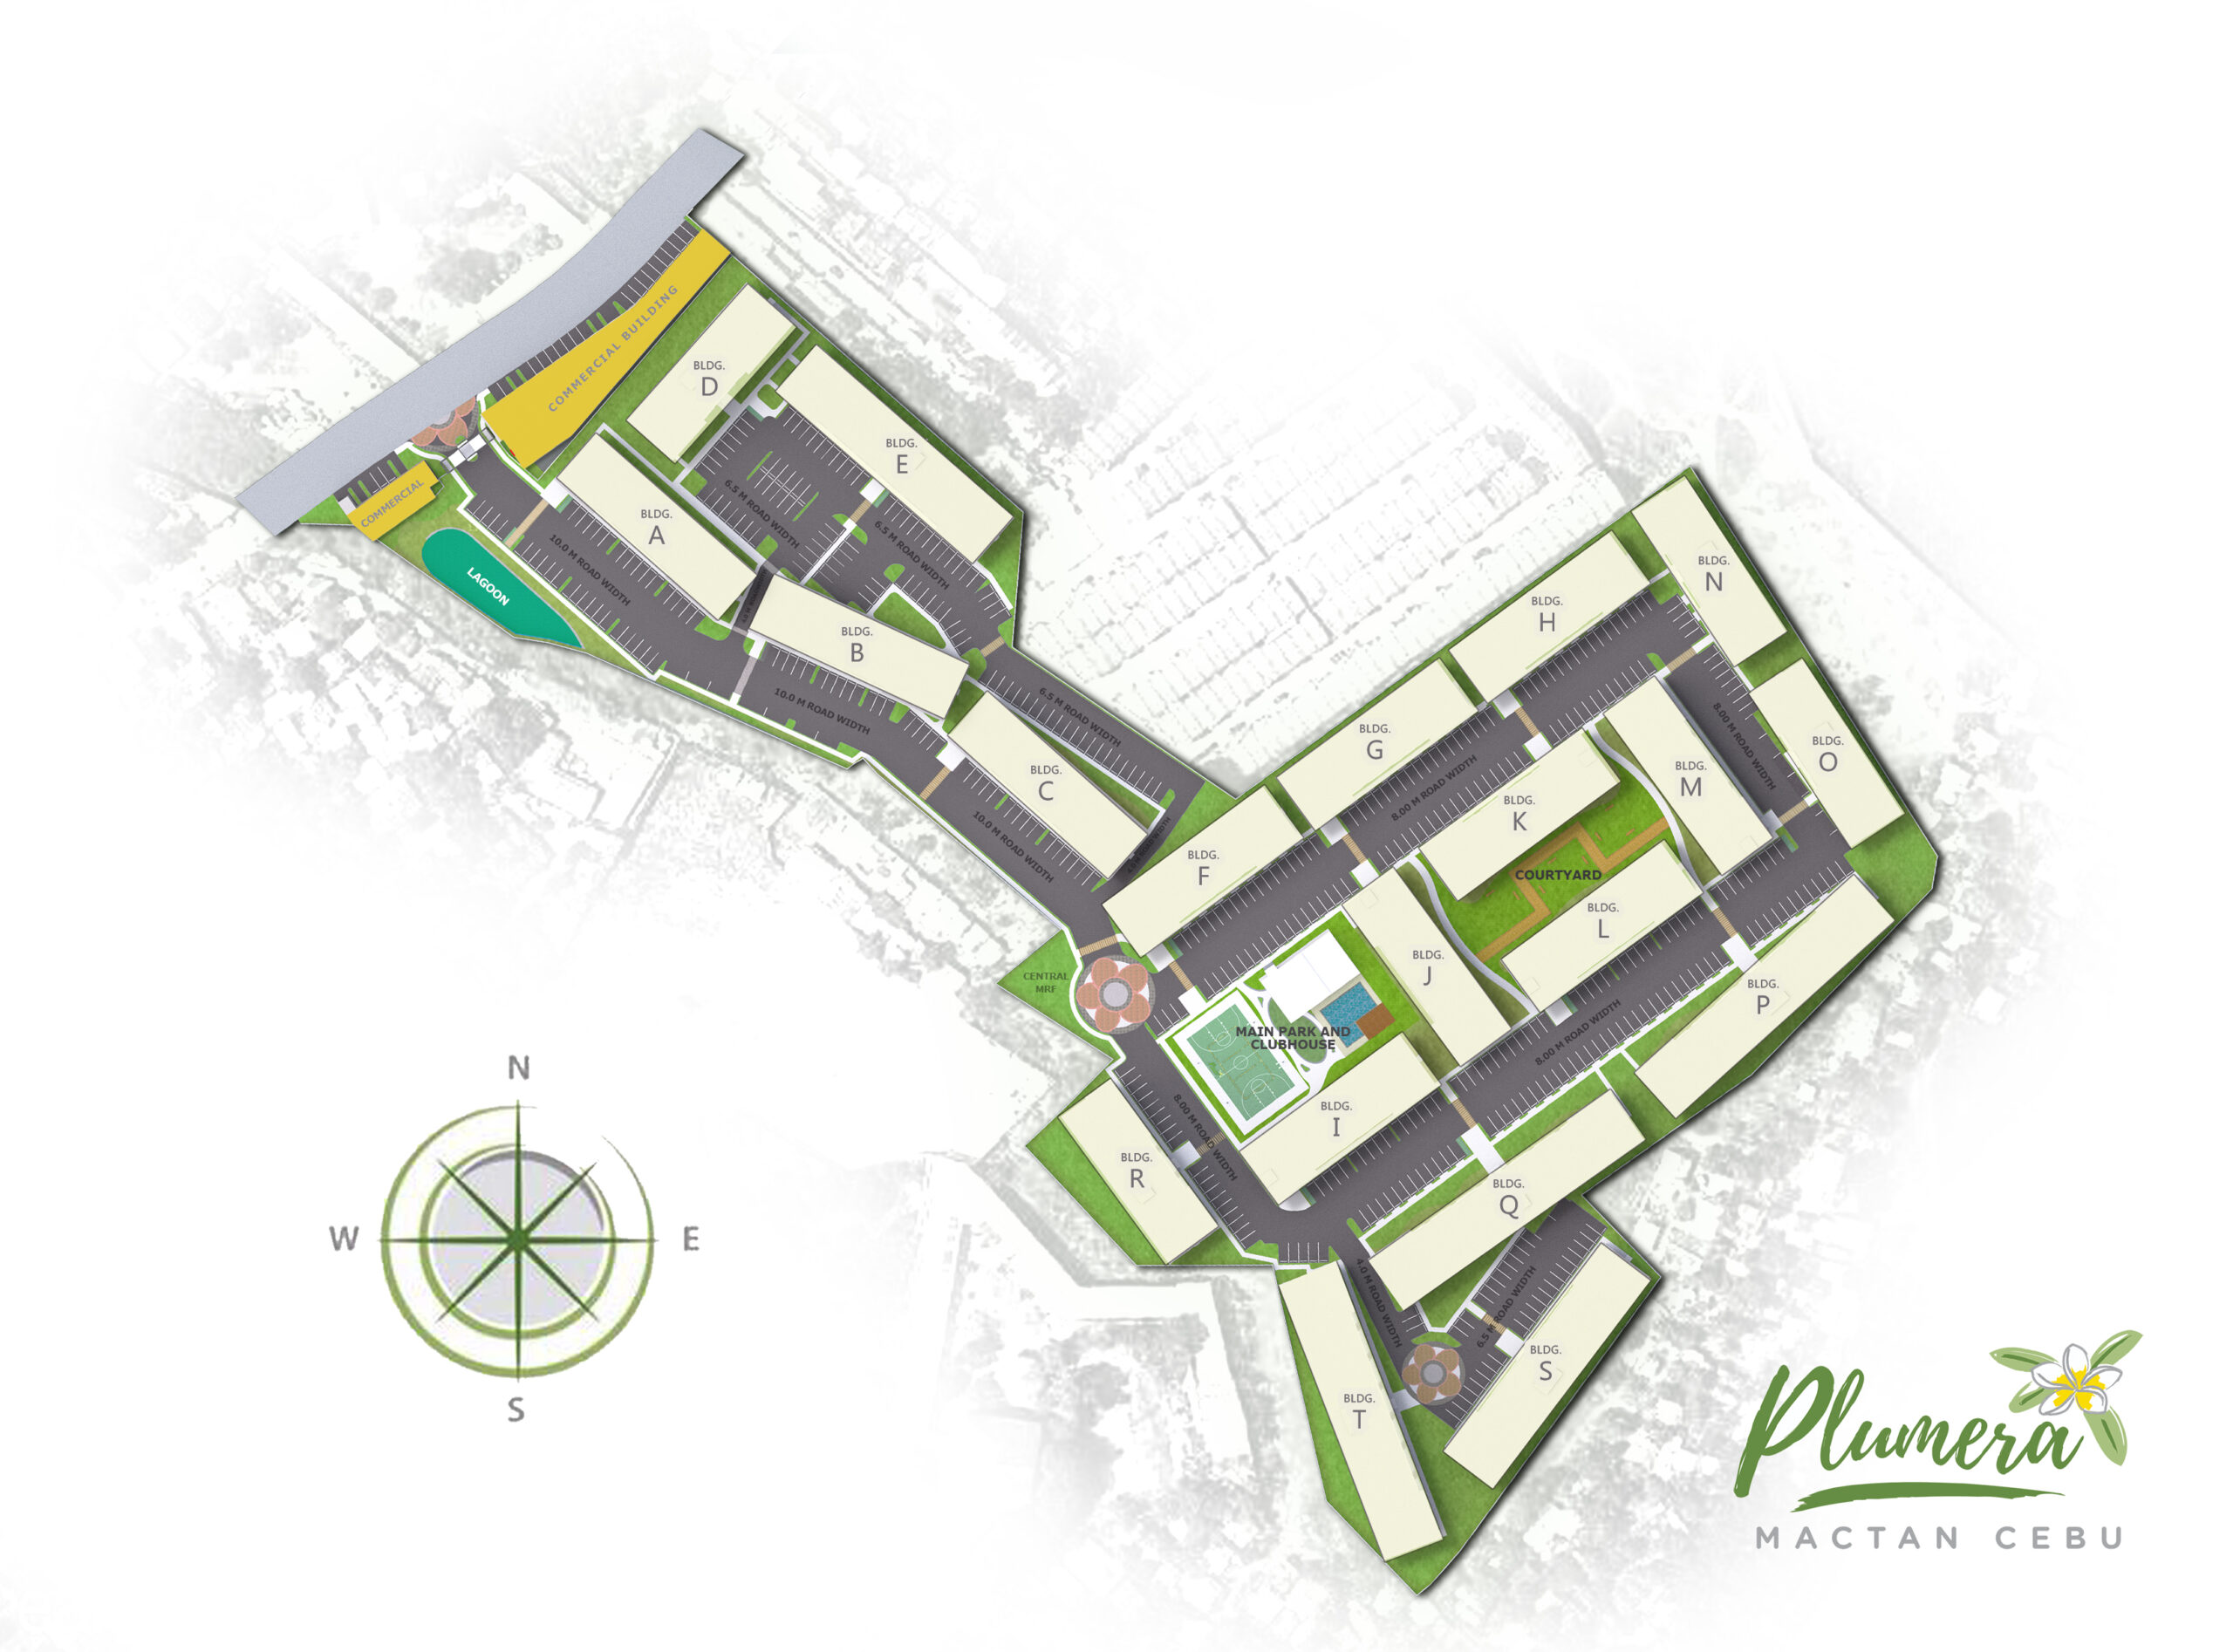 site development plan of plumera mactan